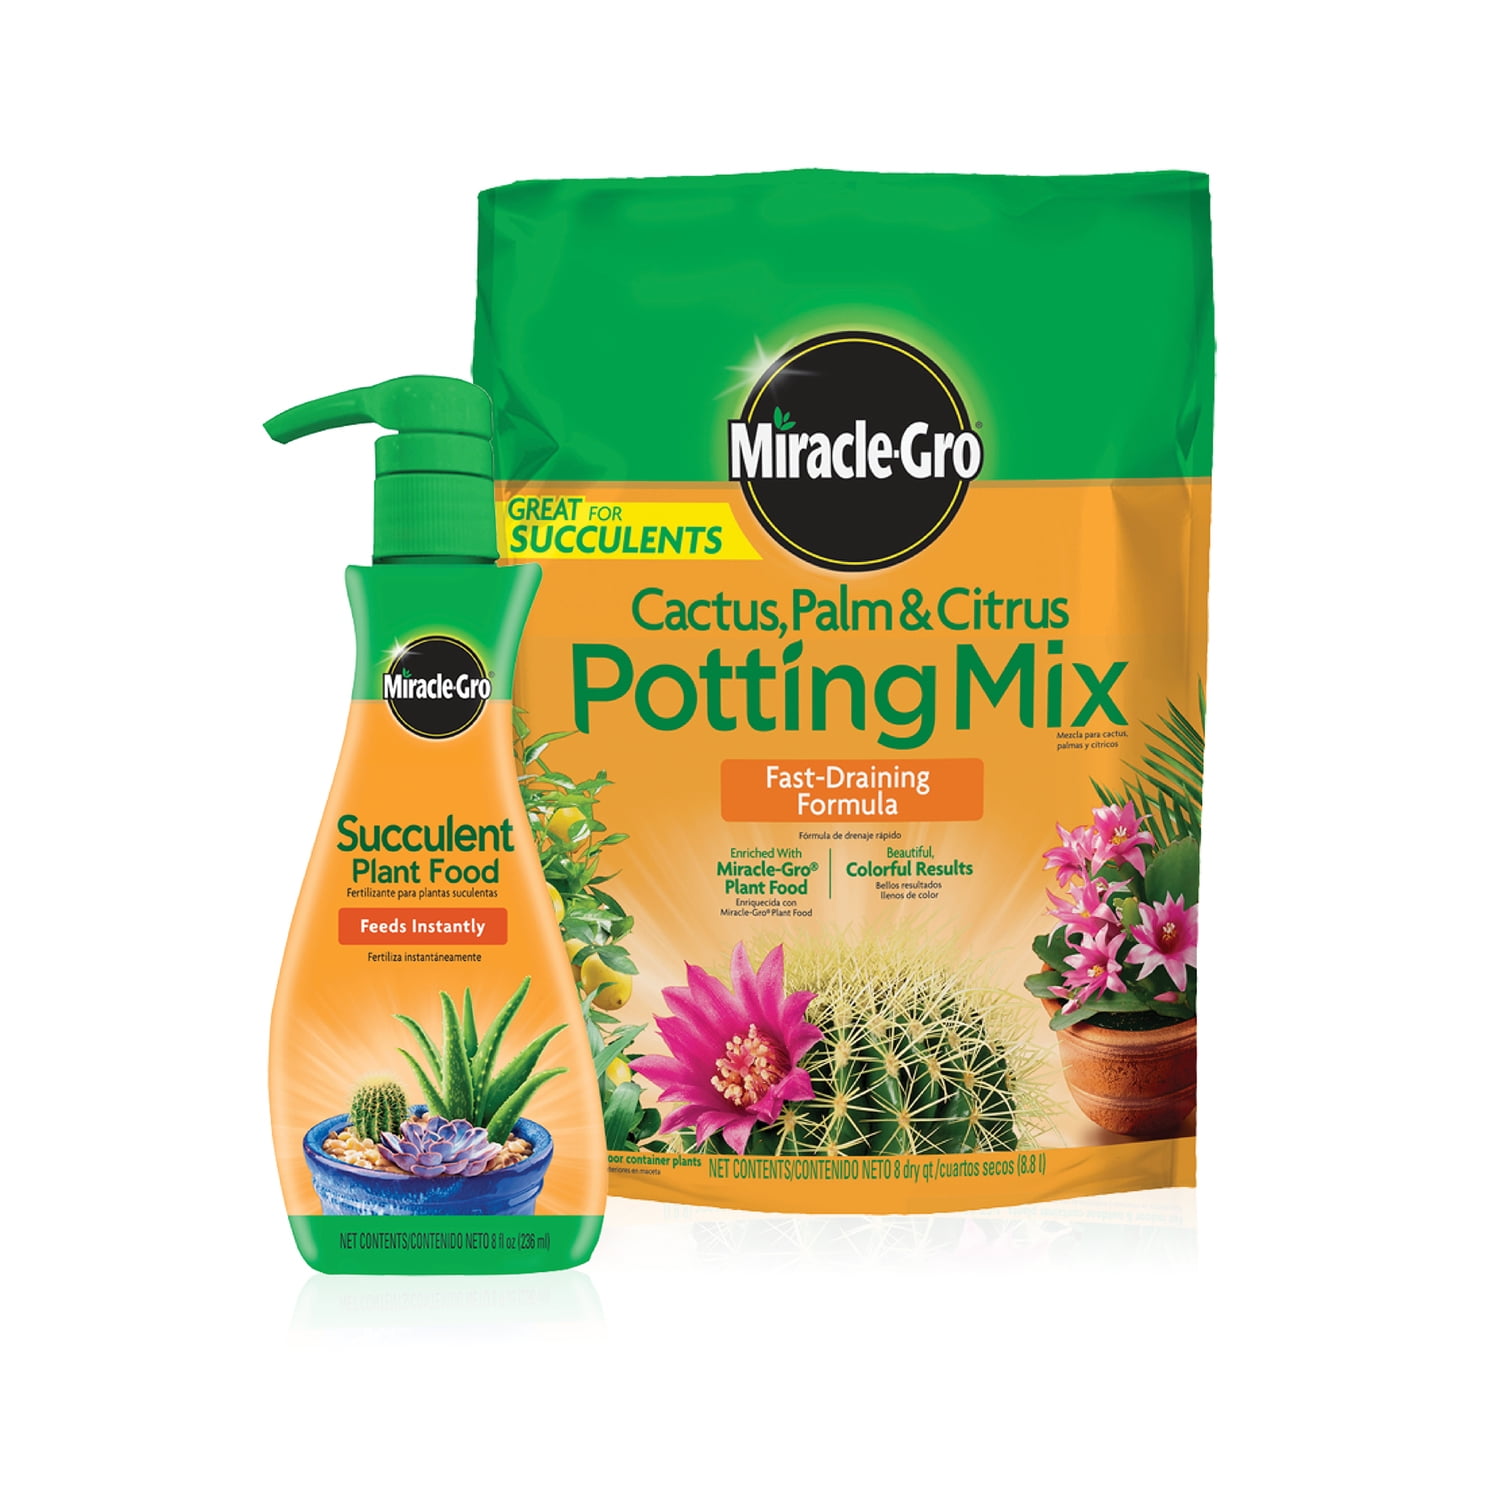 MiracleGro Cactus, Palm & Citrus Potting Mix and Miracle